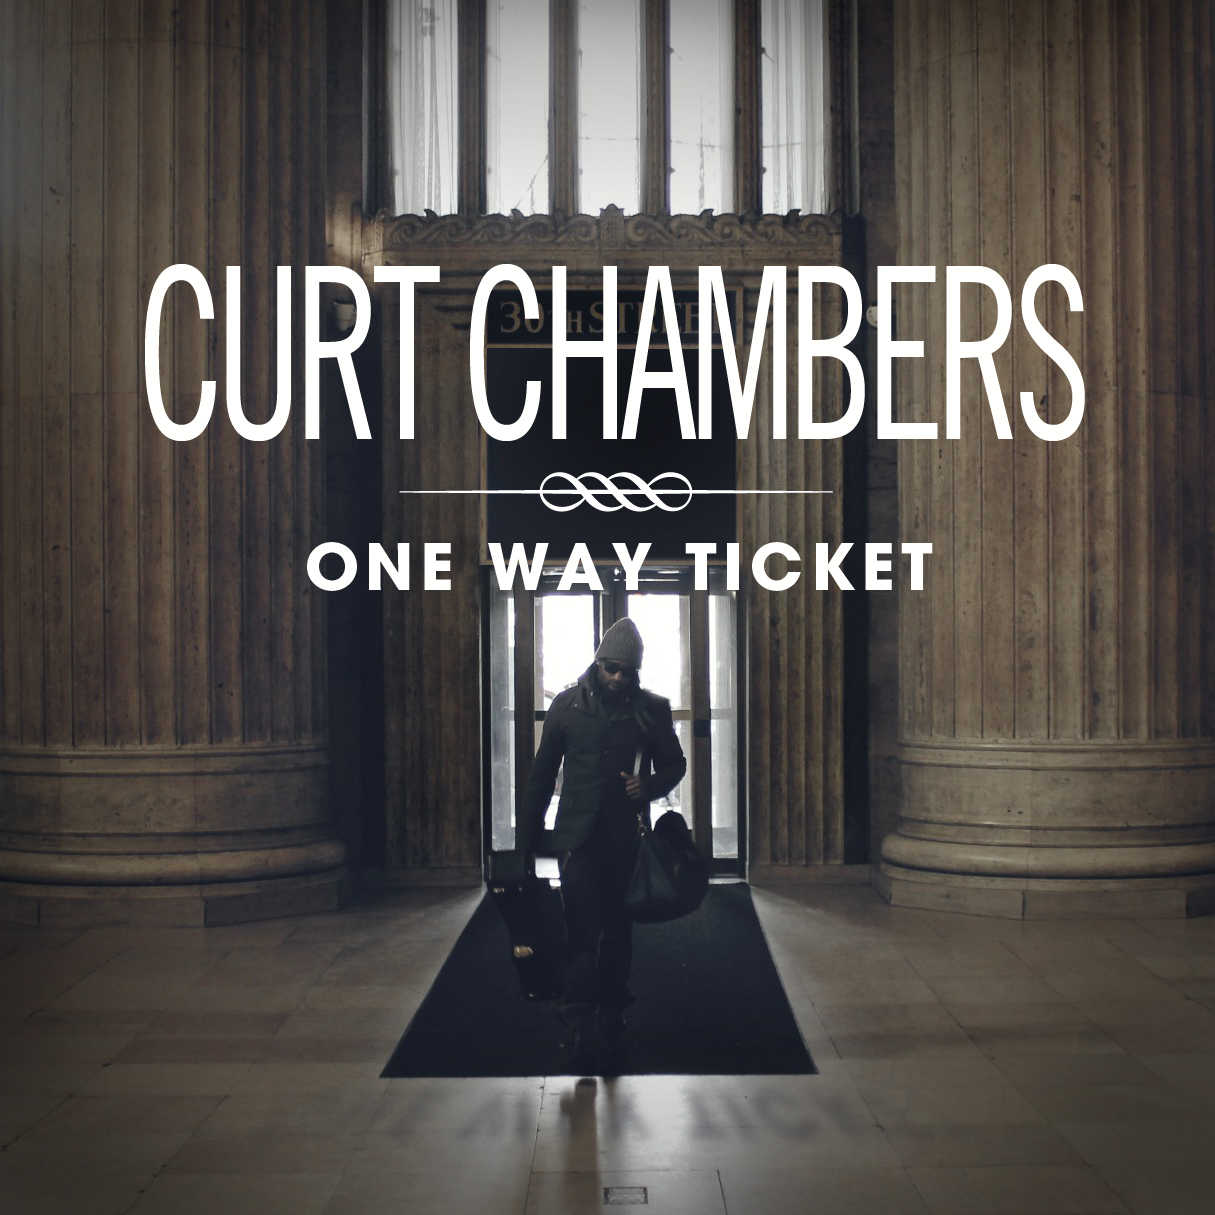 Curt Chambers One Way Ticket